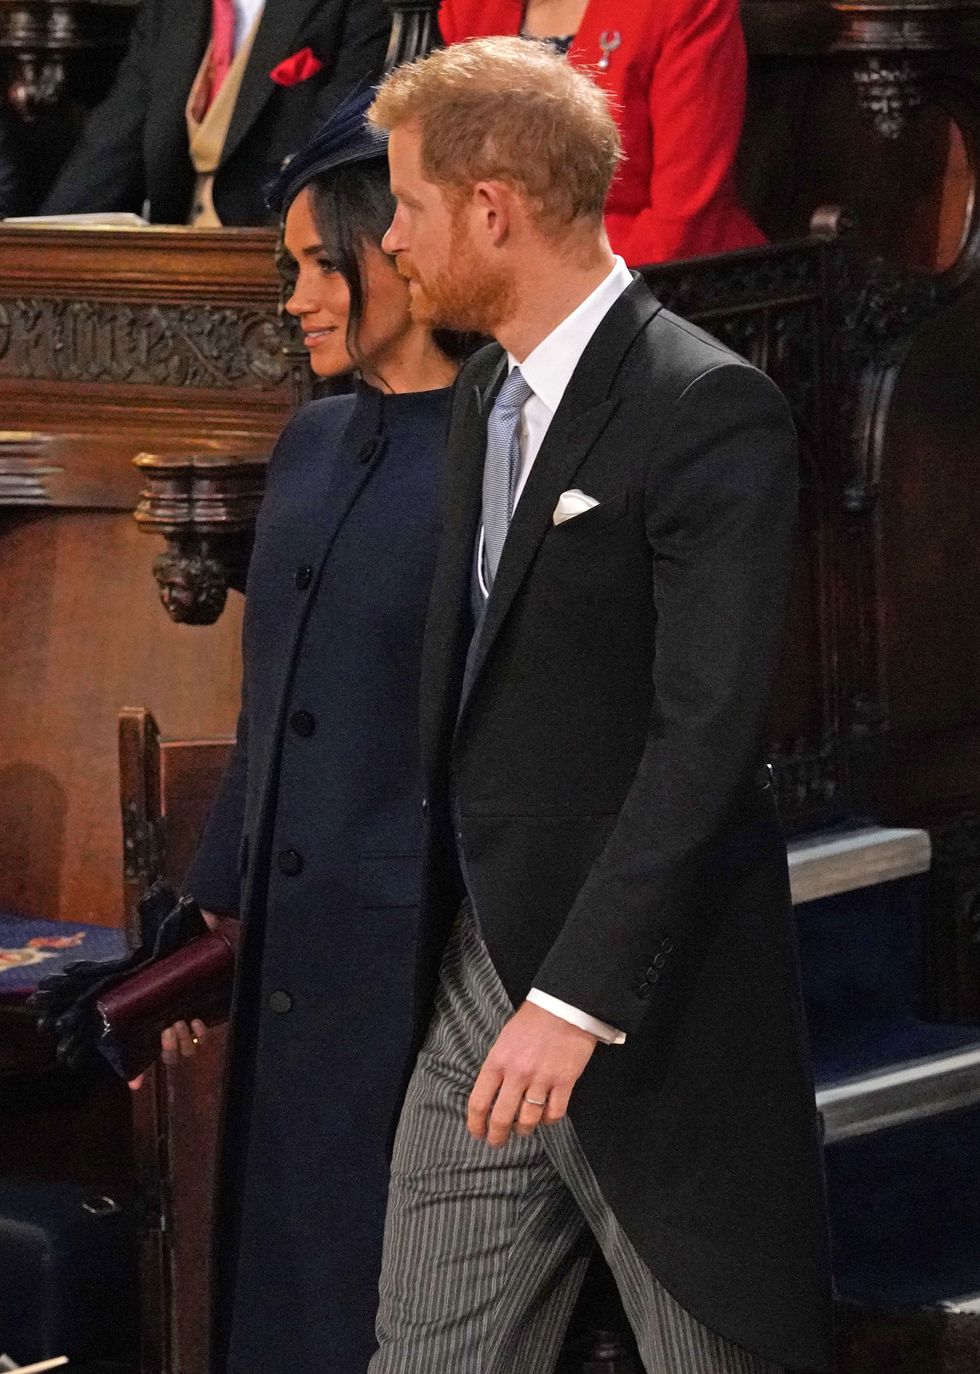 Meghan Markle en Prins Harry bij de royal wedding van Prinses Eugenie